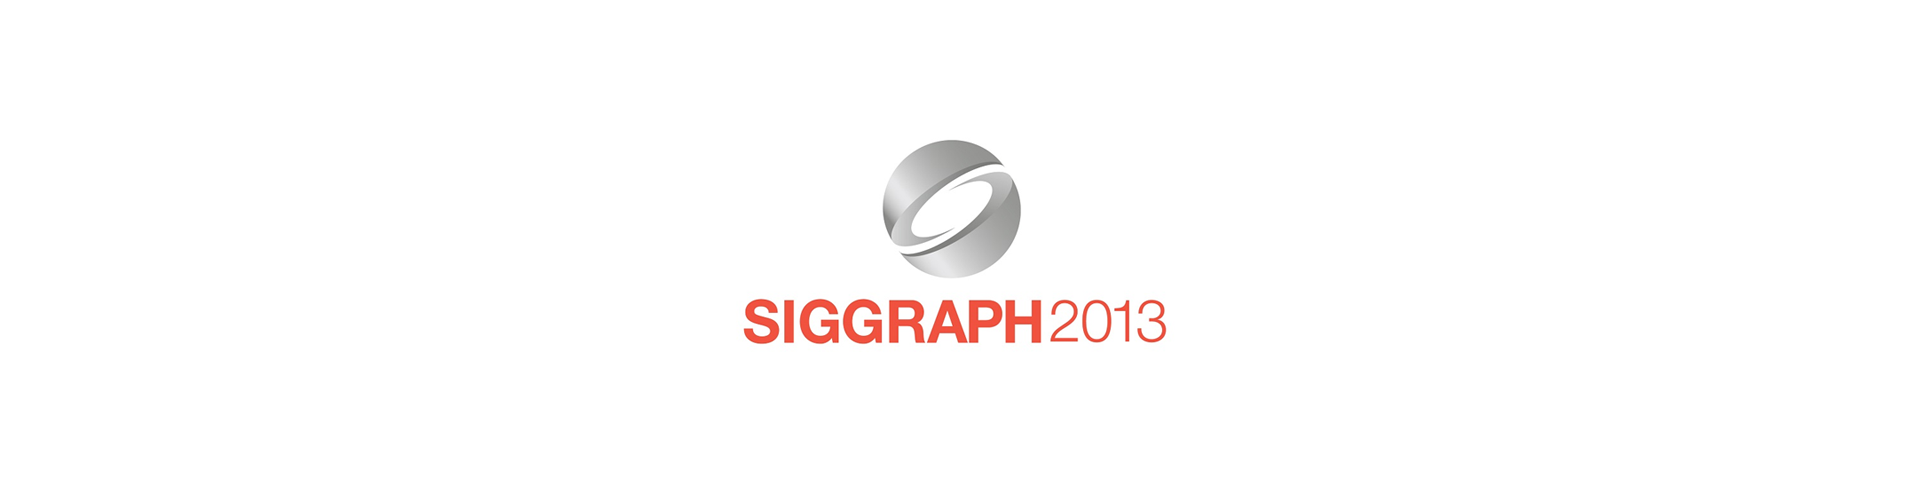 SIGGRAPH 2013 Logo